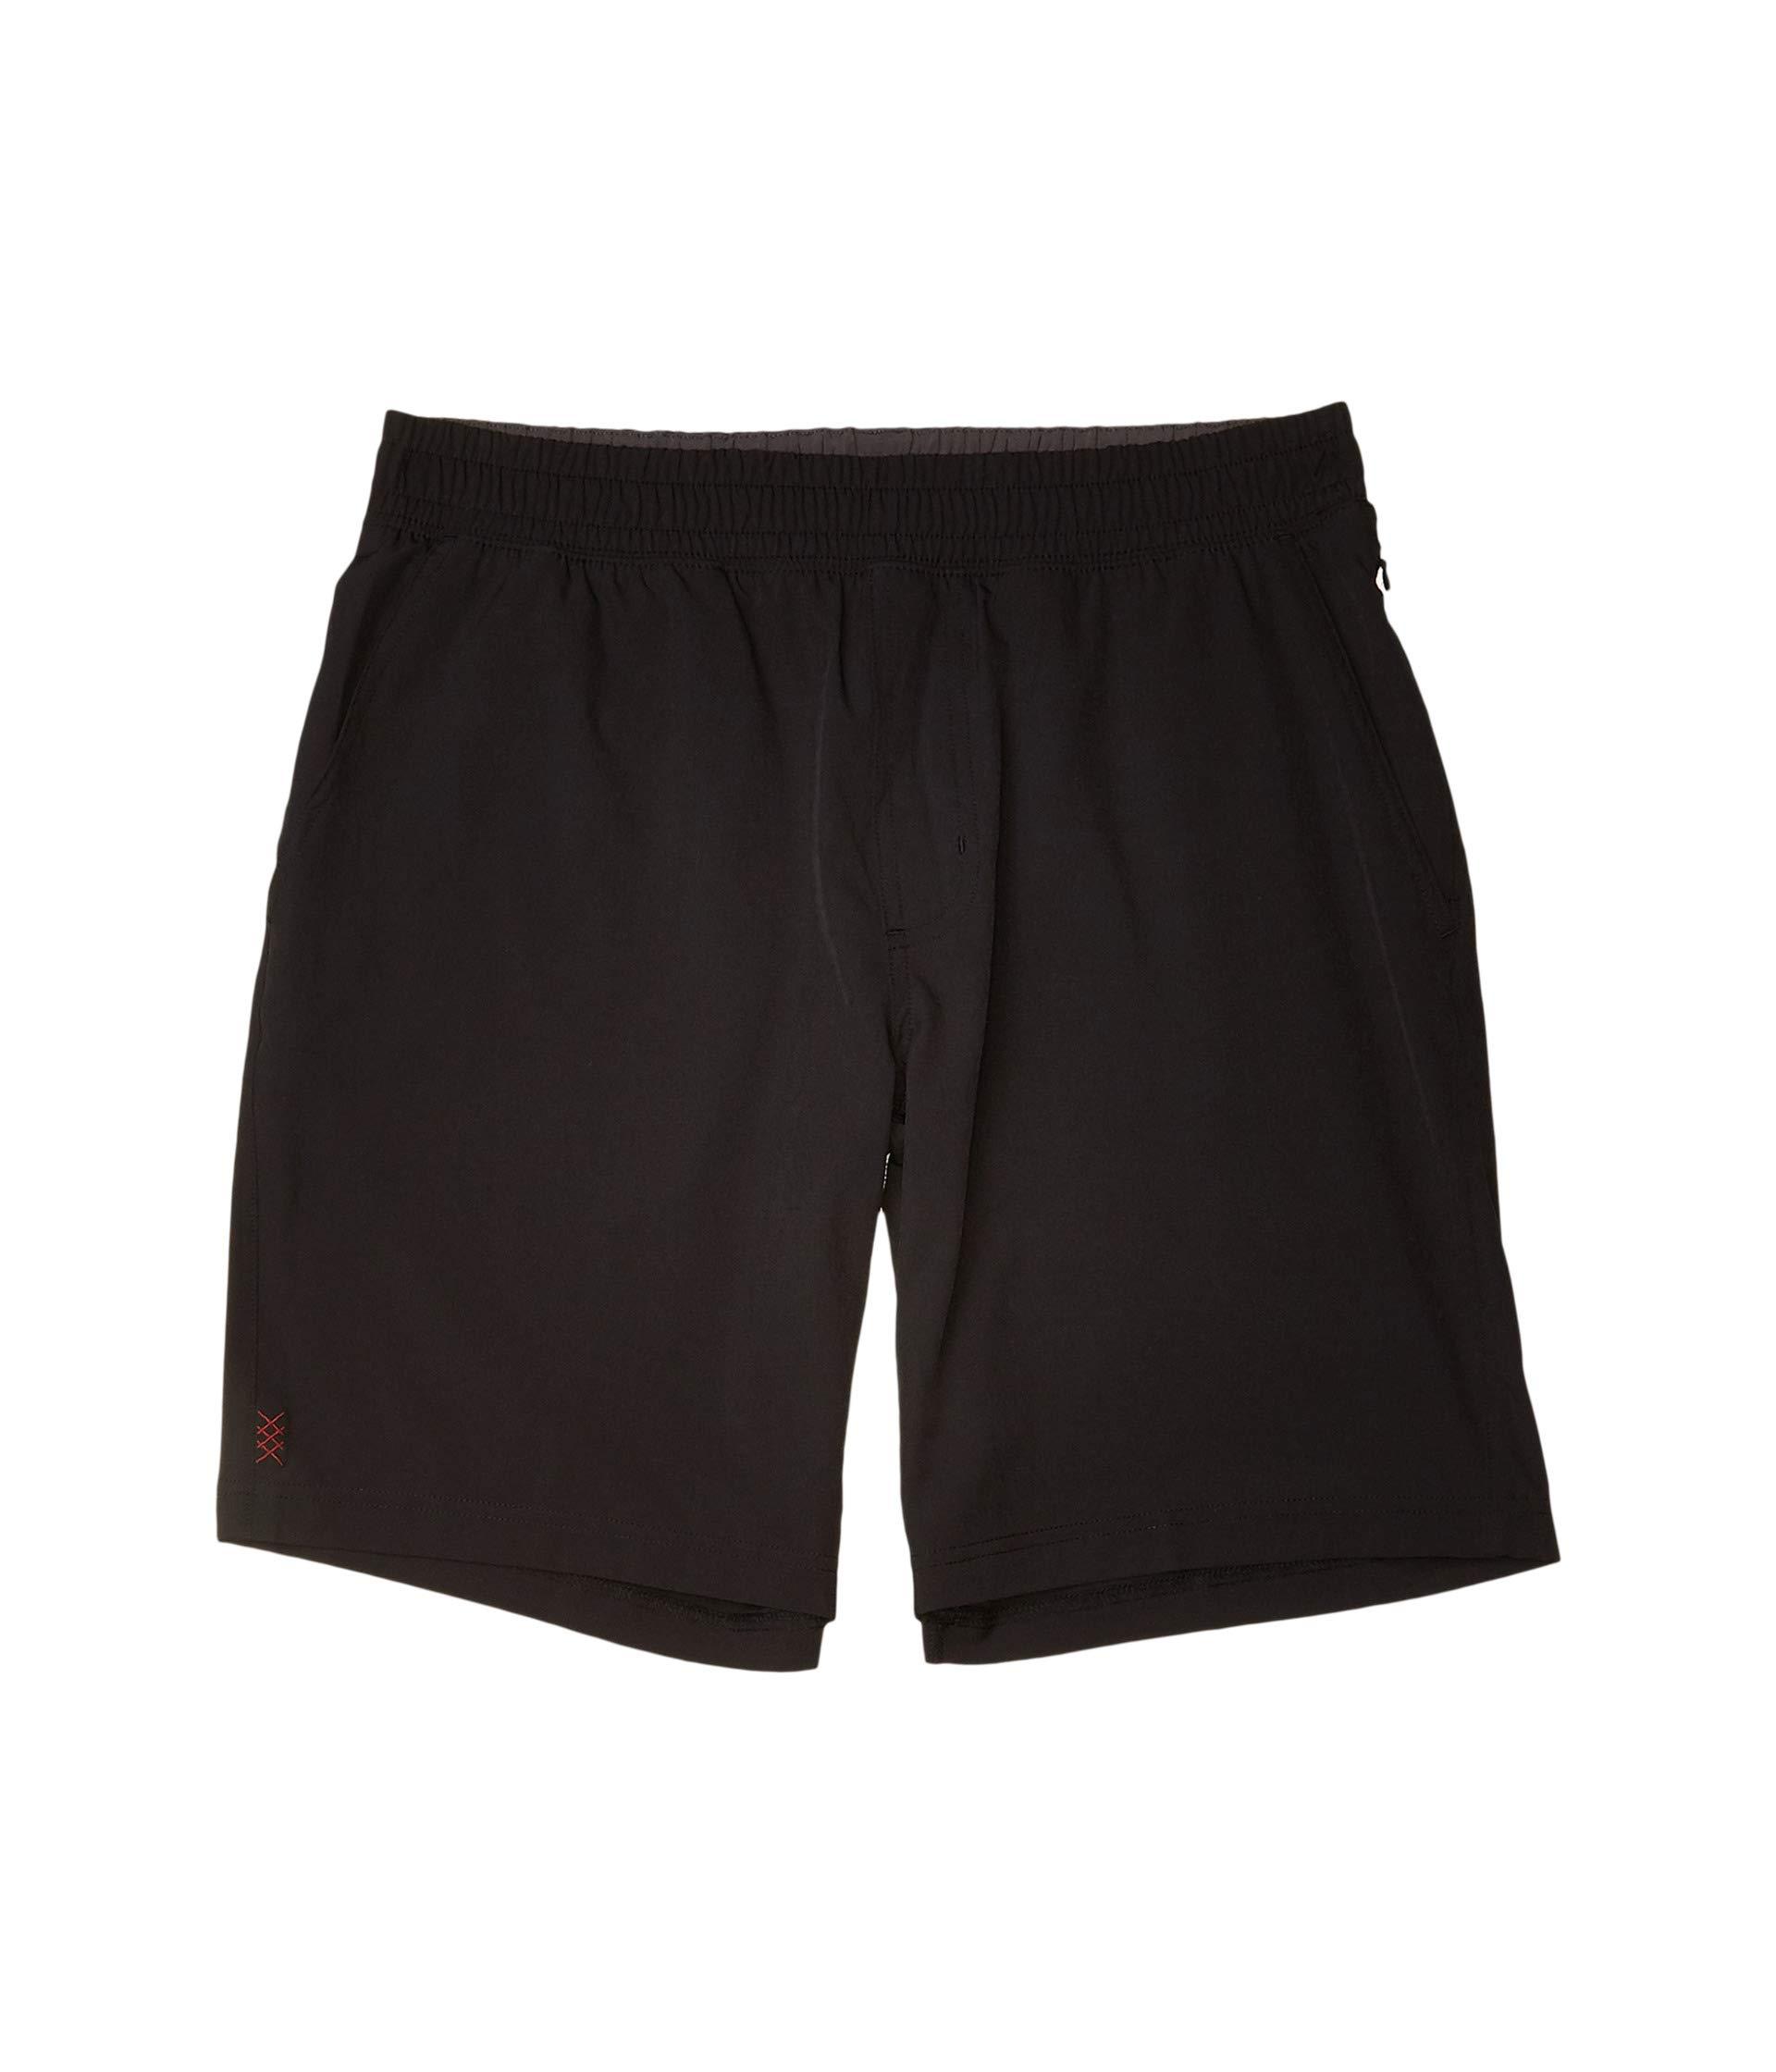 Rhone Synthetic 9 Mako Shorts - Unlined in Black for Men - Lyst